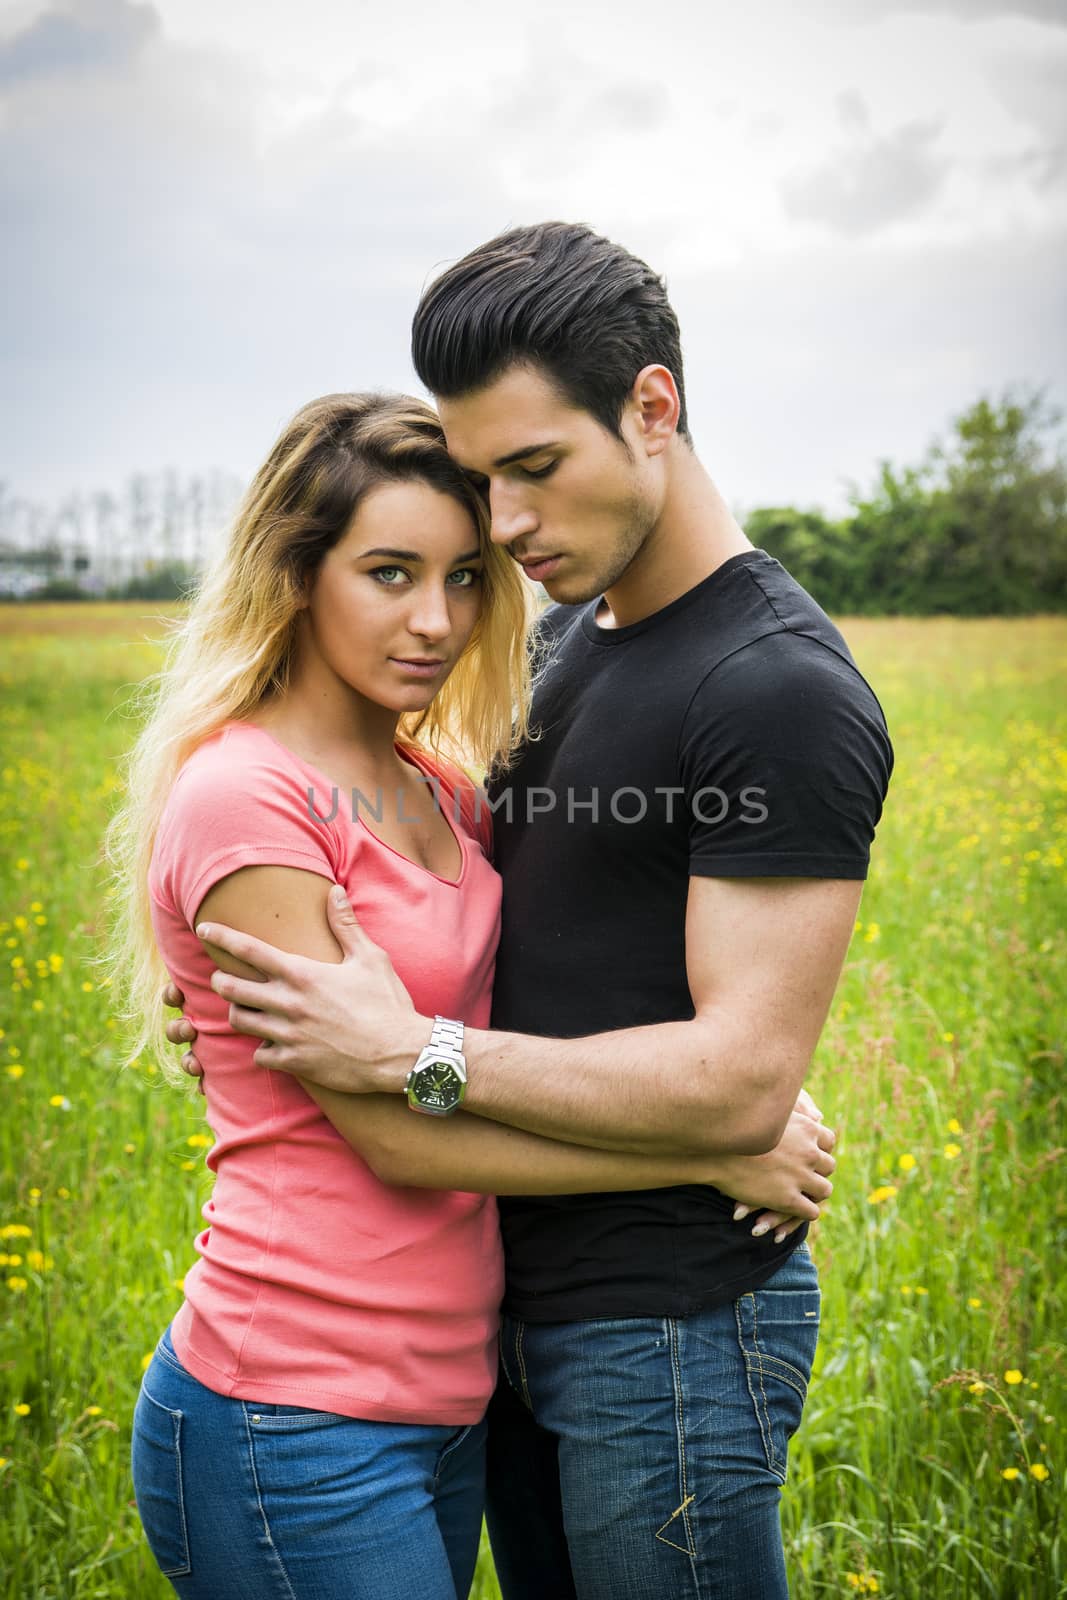 Boyfriend and girlfriend standing showing romantic love by artofphoto